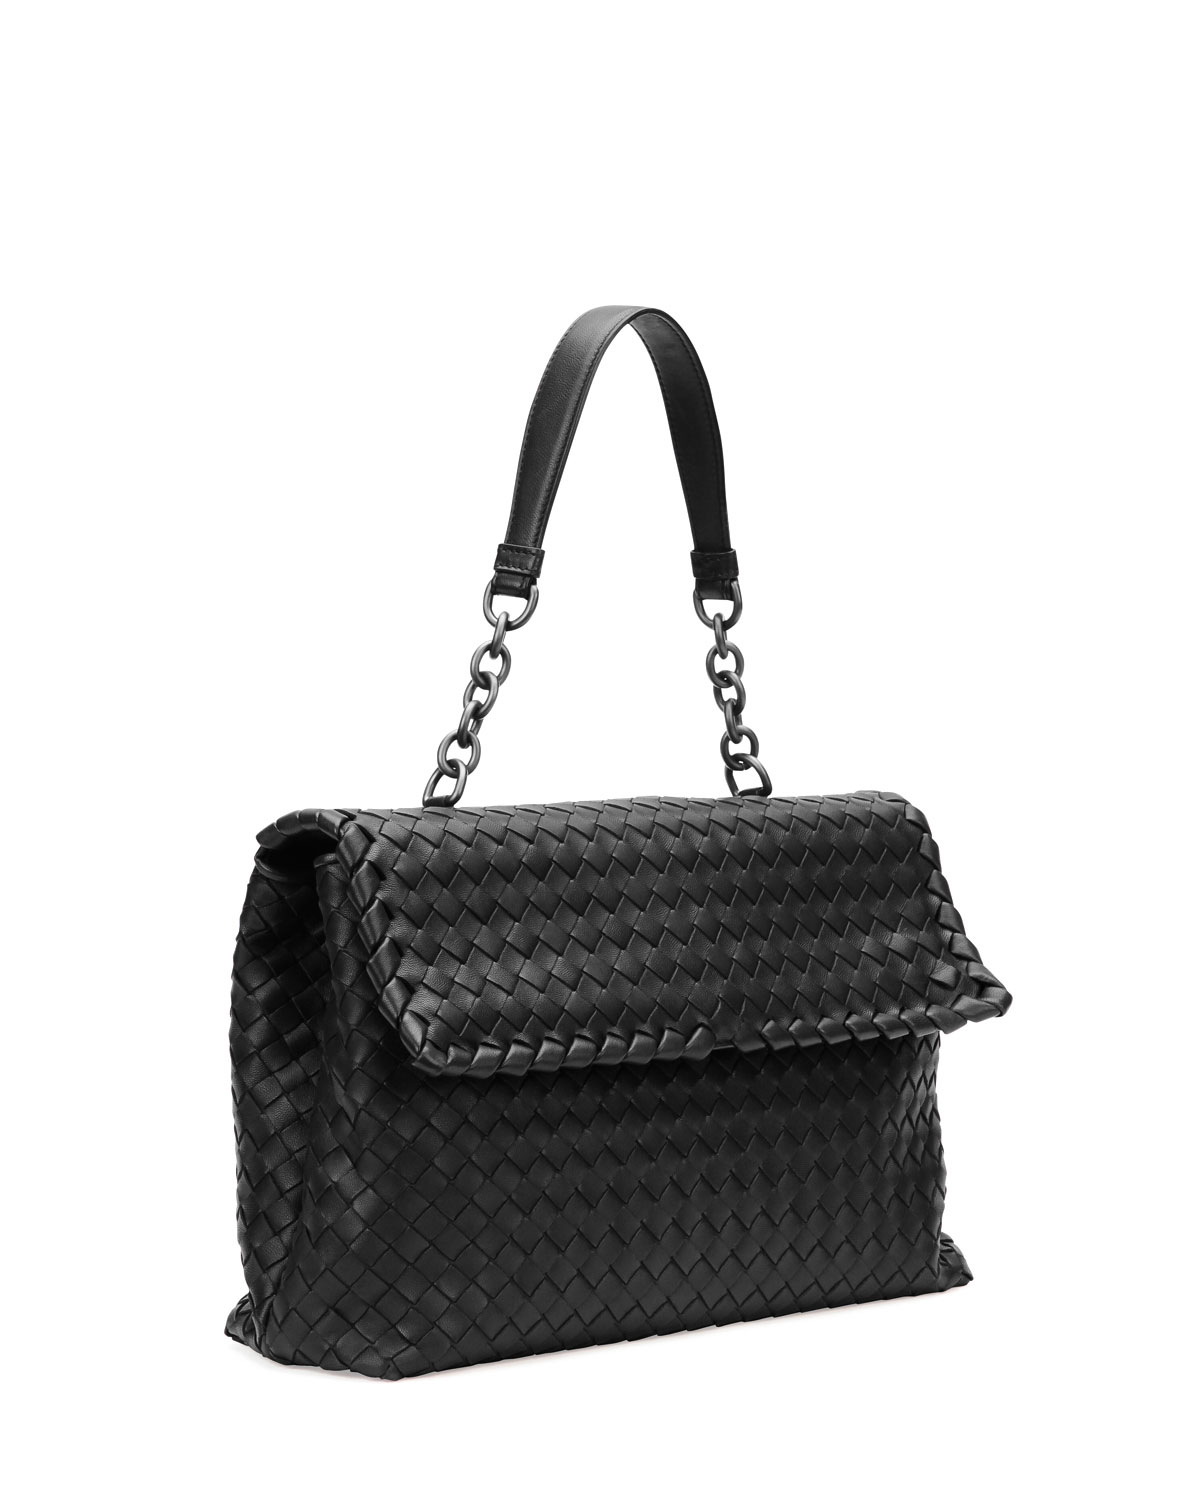 Bottega Veneta Olimpia Medium Shoulder Bag in Black - Lyst